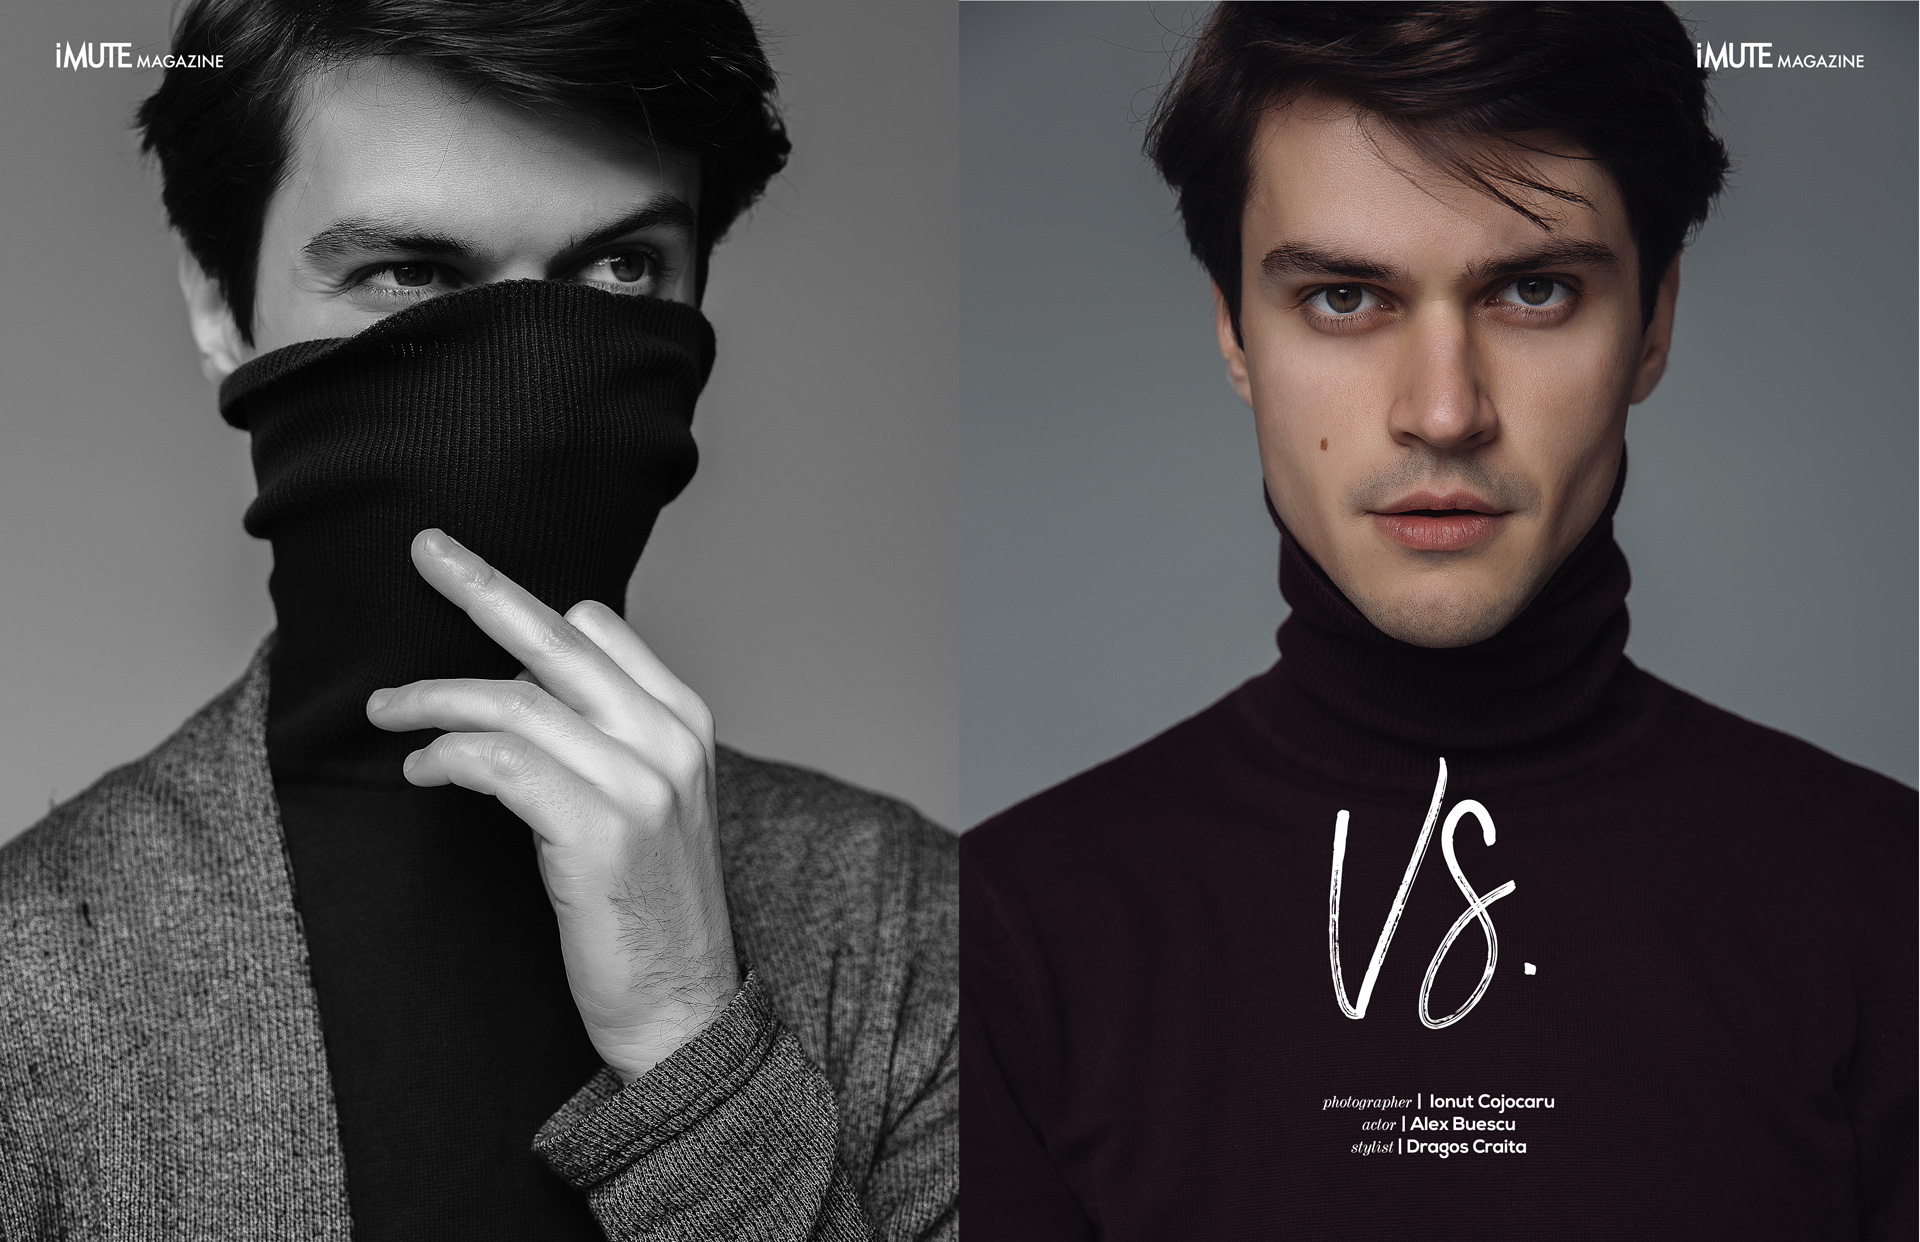 Versus feature editorial for iMute Magazine Photographer | Ionut Cojocaru Actor | Alex Buescu Stylist | Dragos Craita